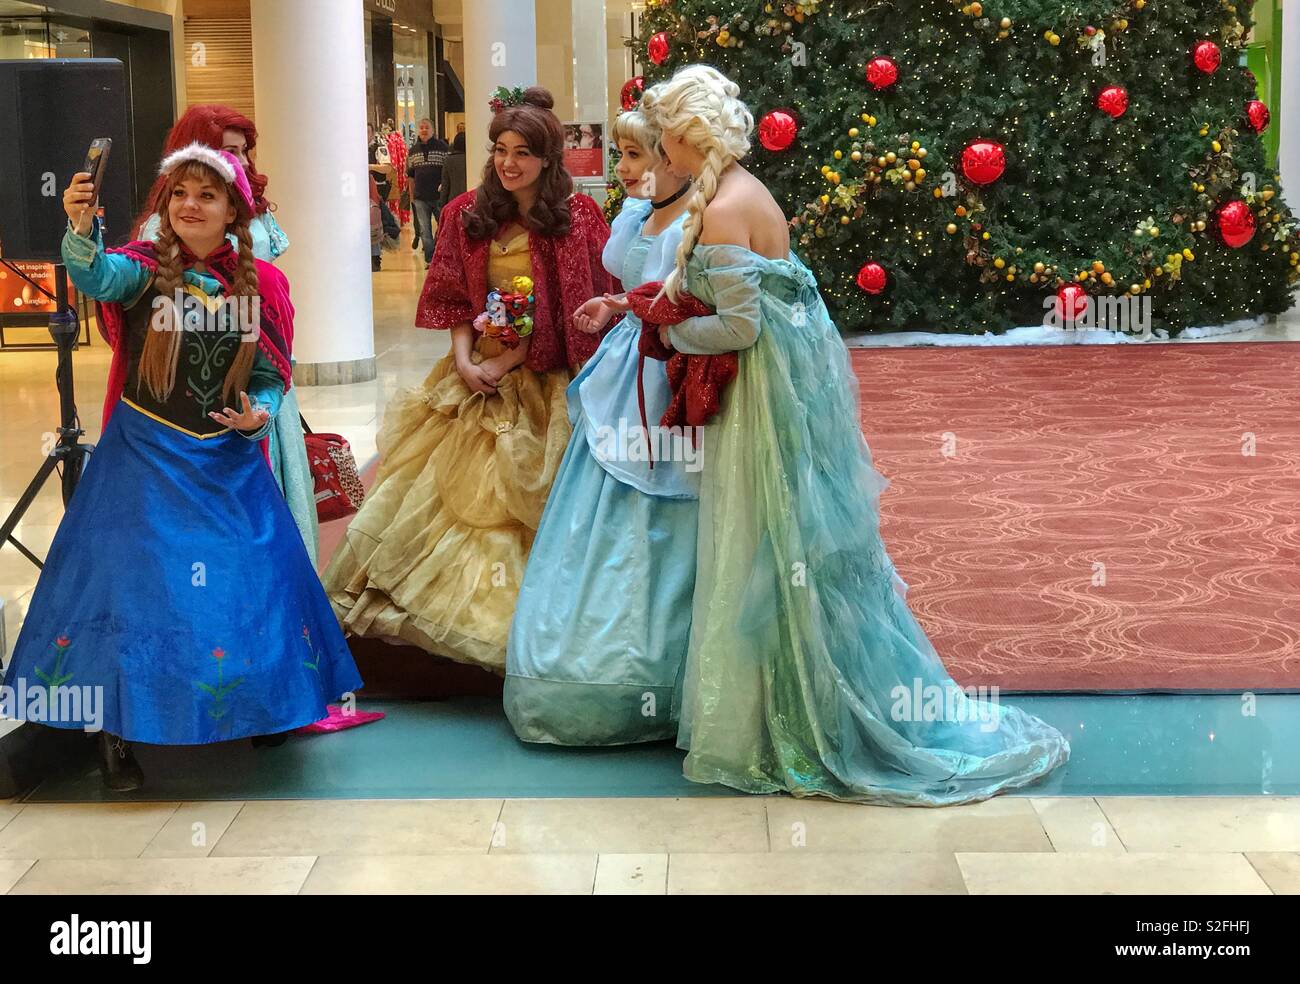 Disney princess dresses hi-res stock photography and images - Alamy